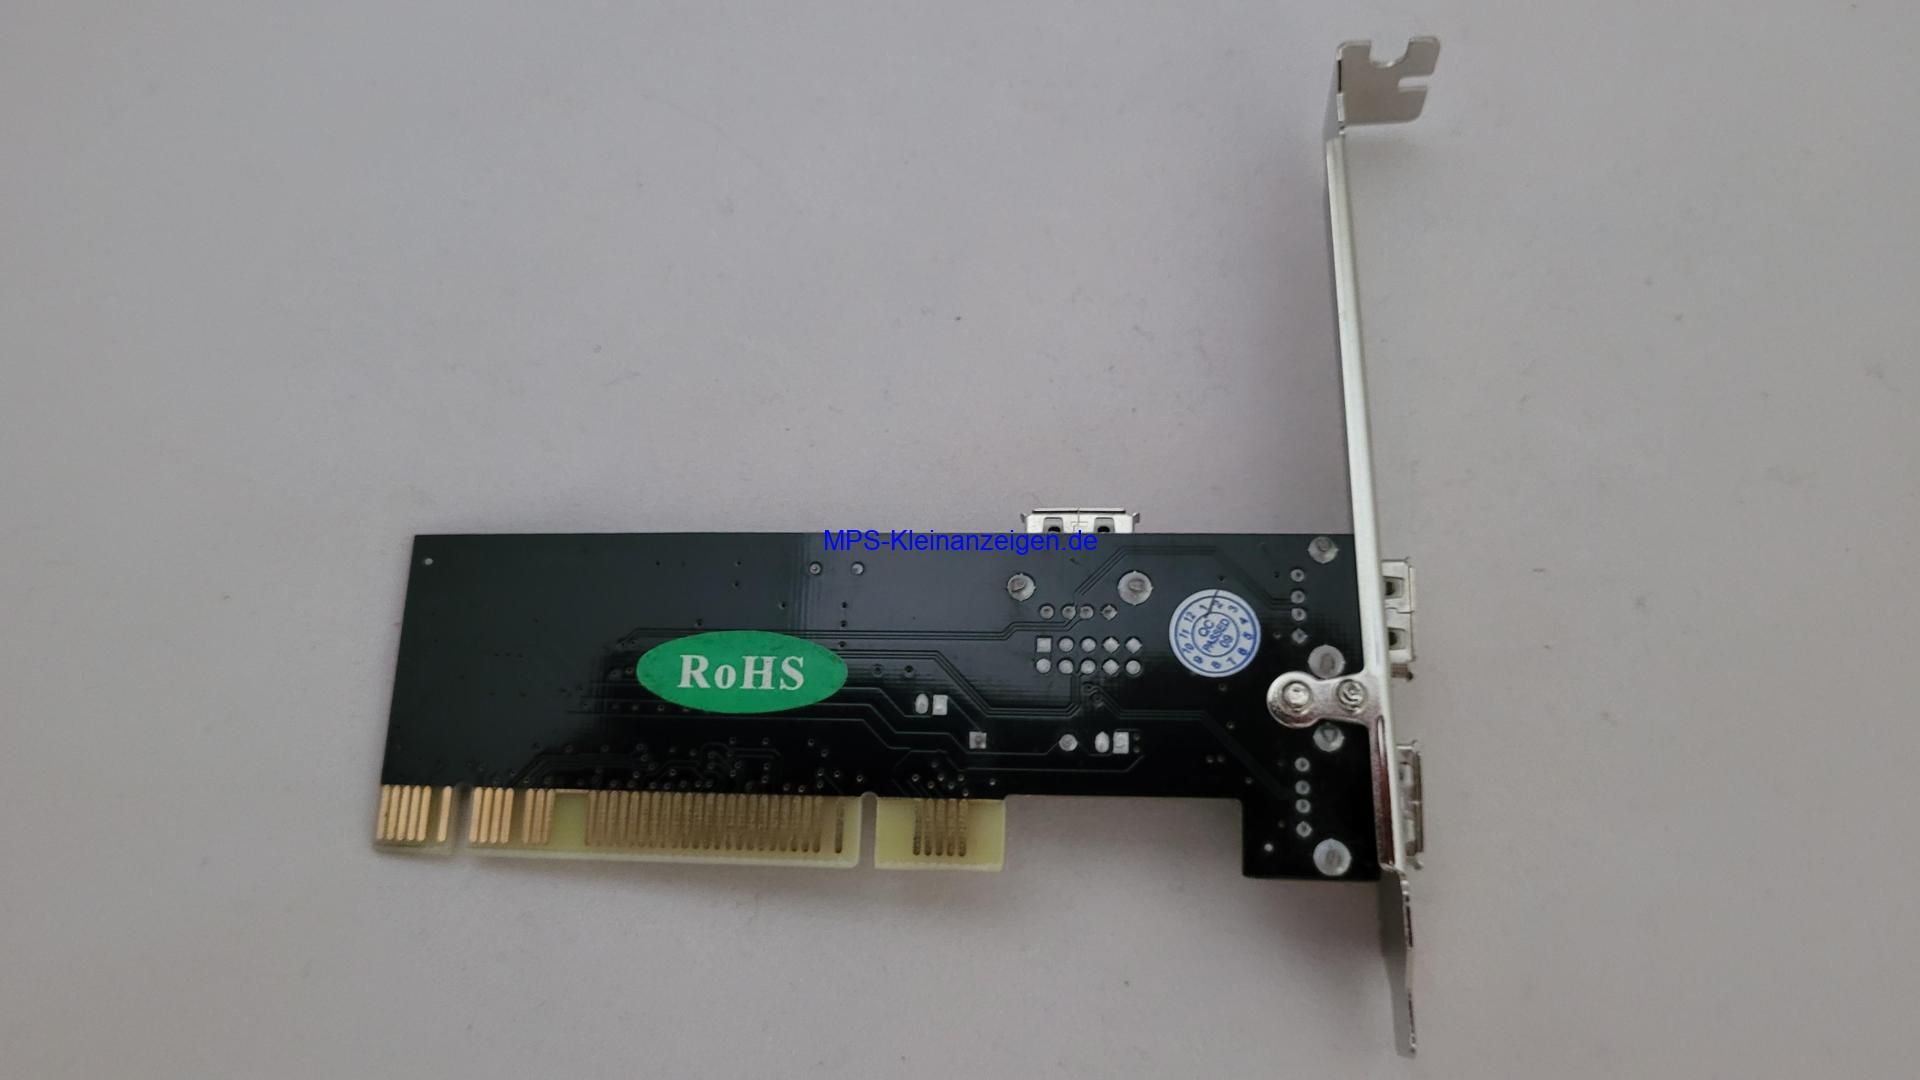 VIA Vectro VT6212L PCI USB 2.0 UHCI / 2-Port-Host-Controller - 2